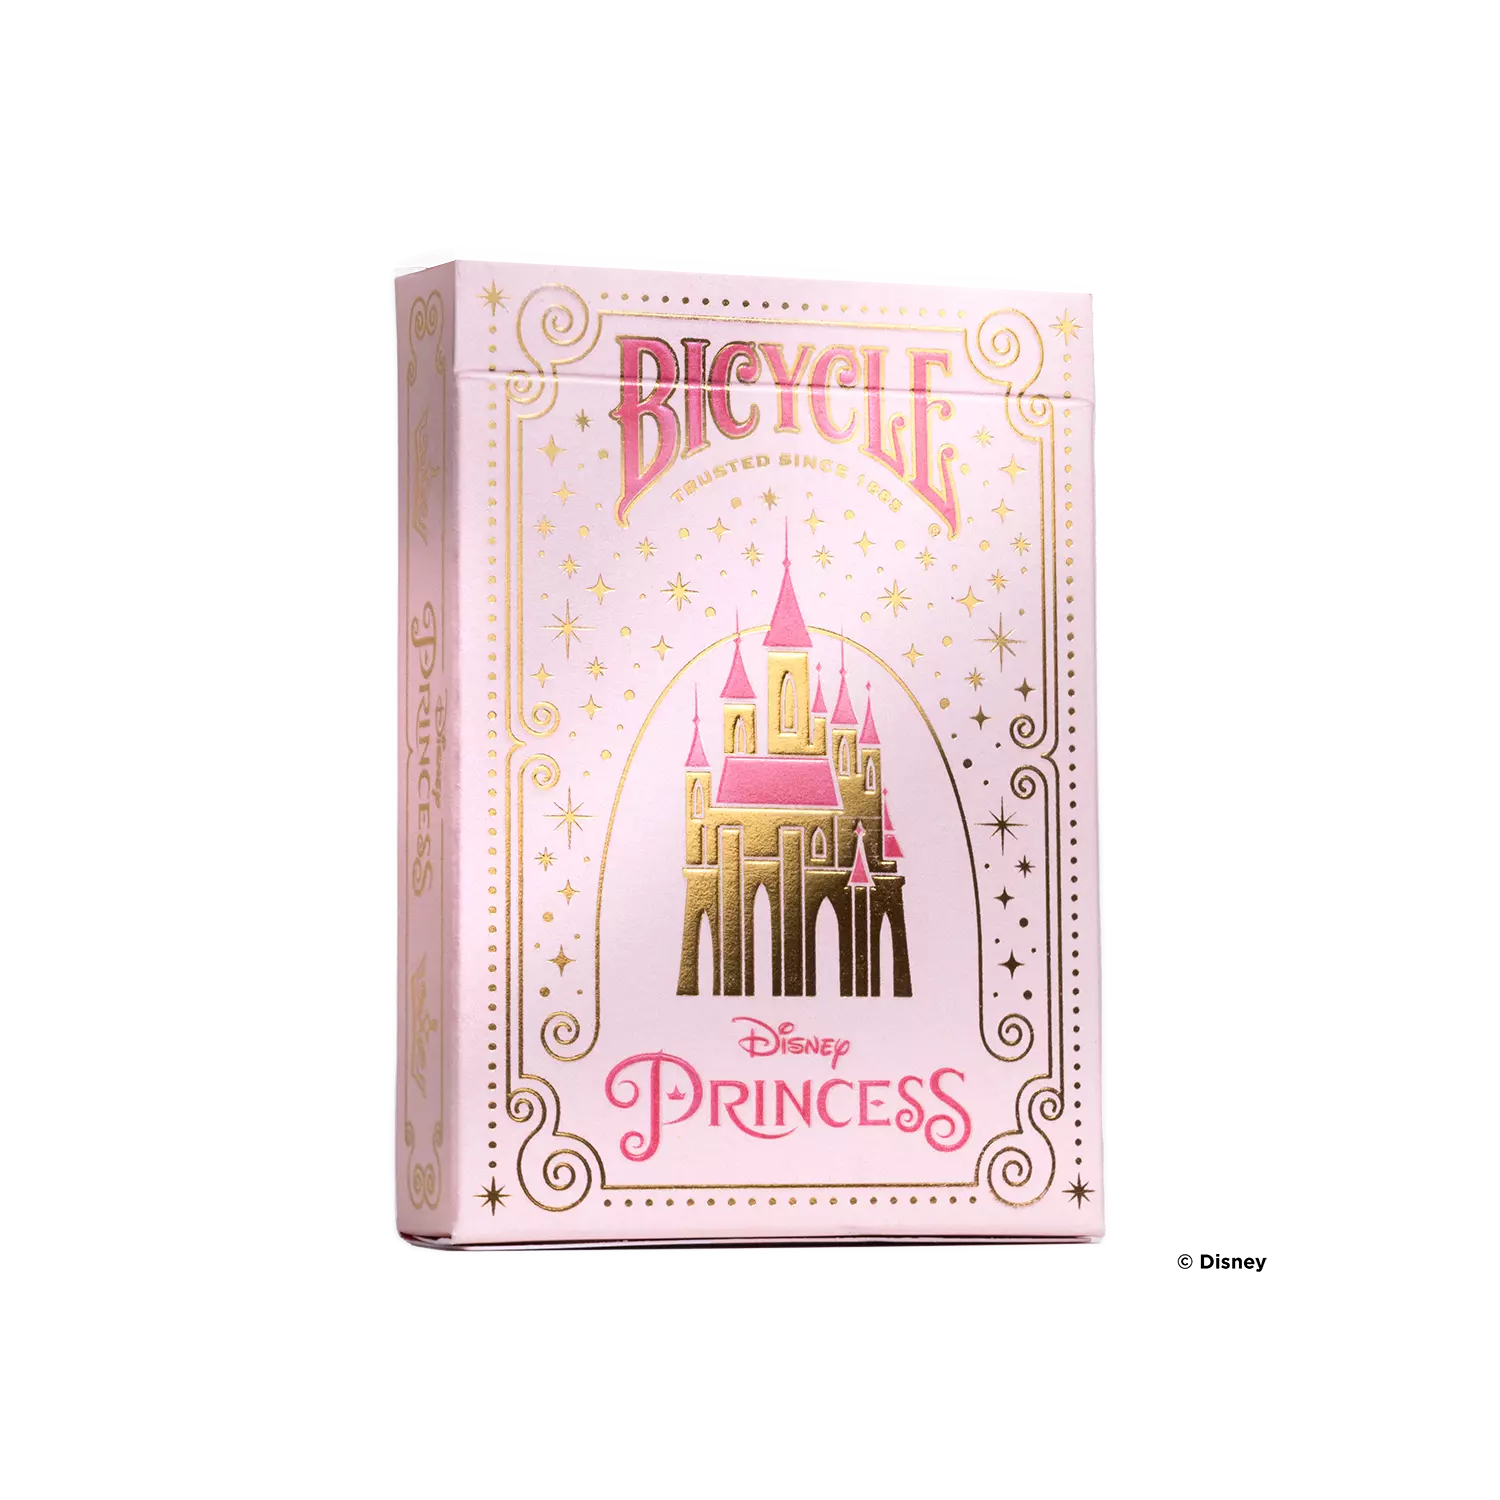 Bicycle - Disney Princess - Pink